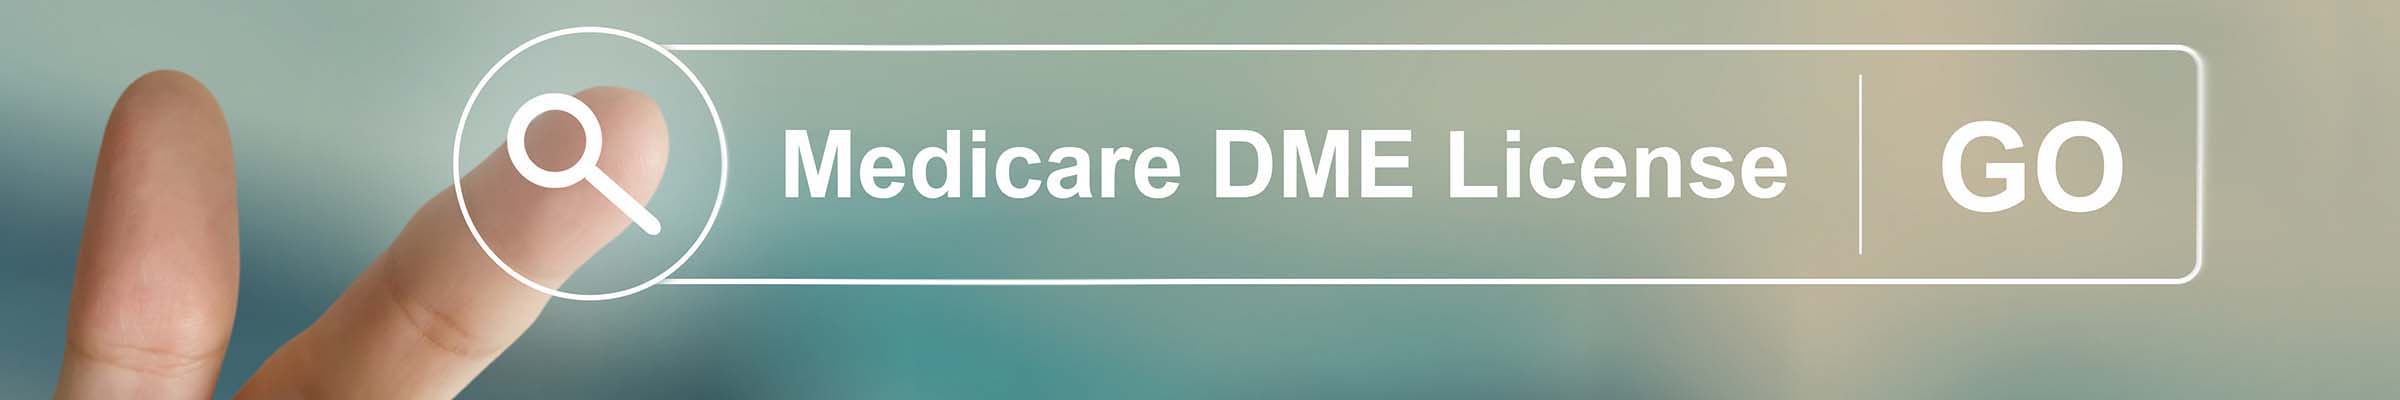 finger clicking button called Medicare DME license